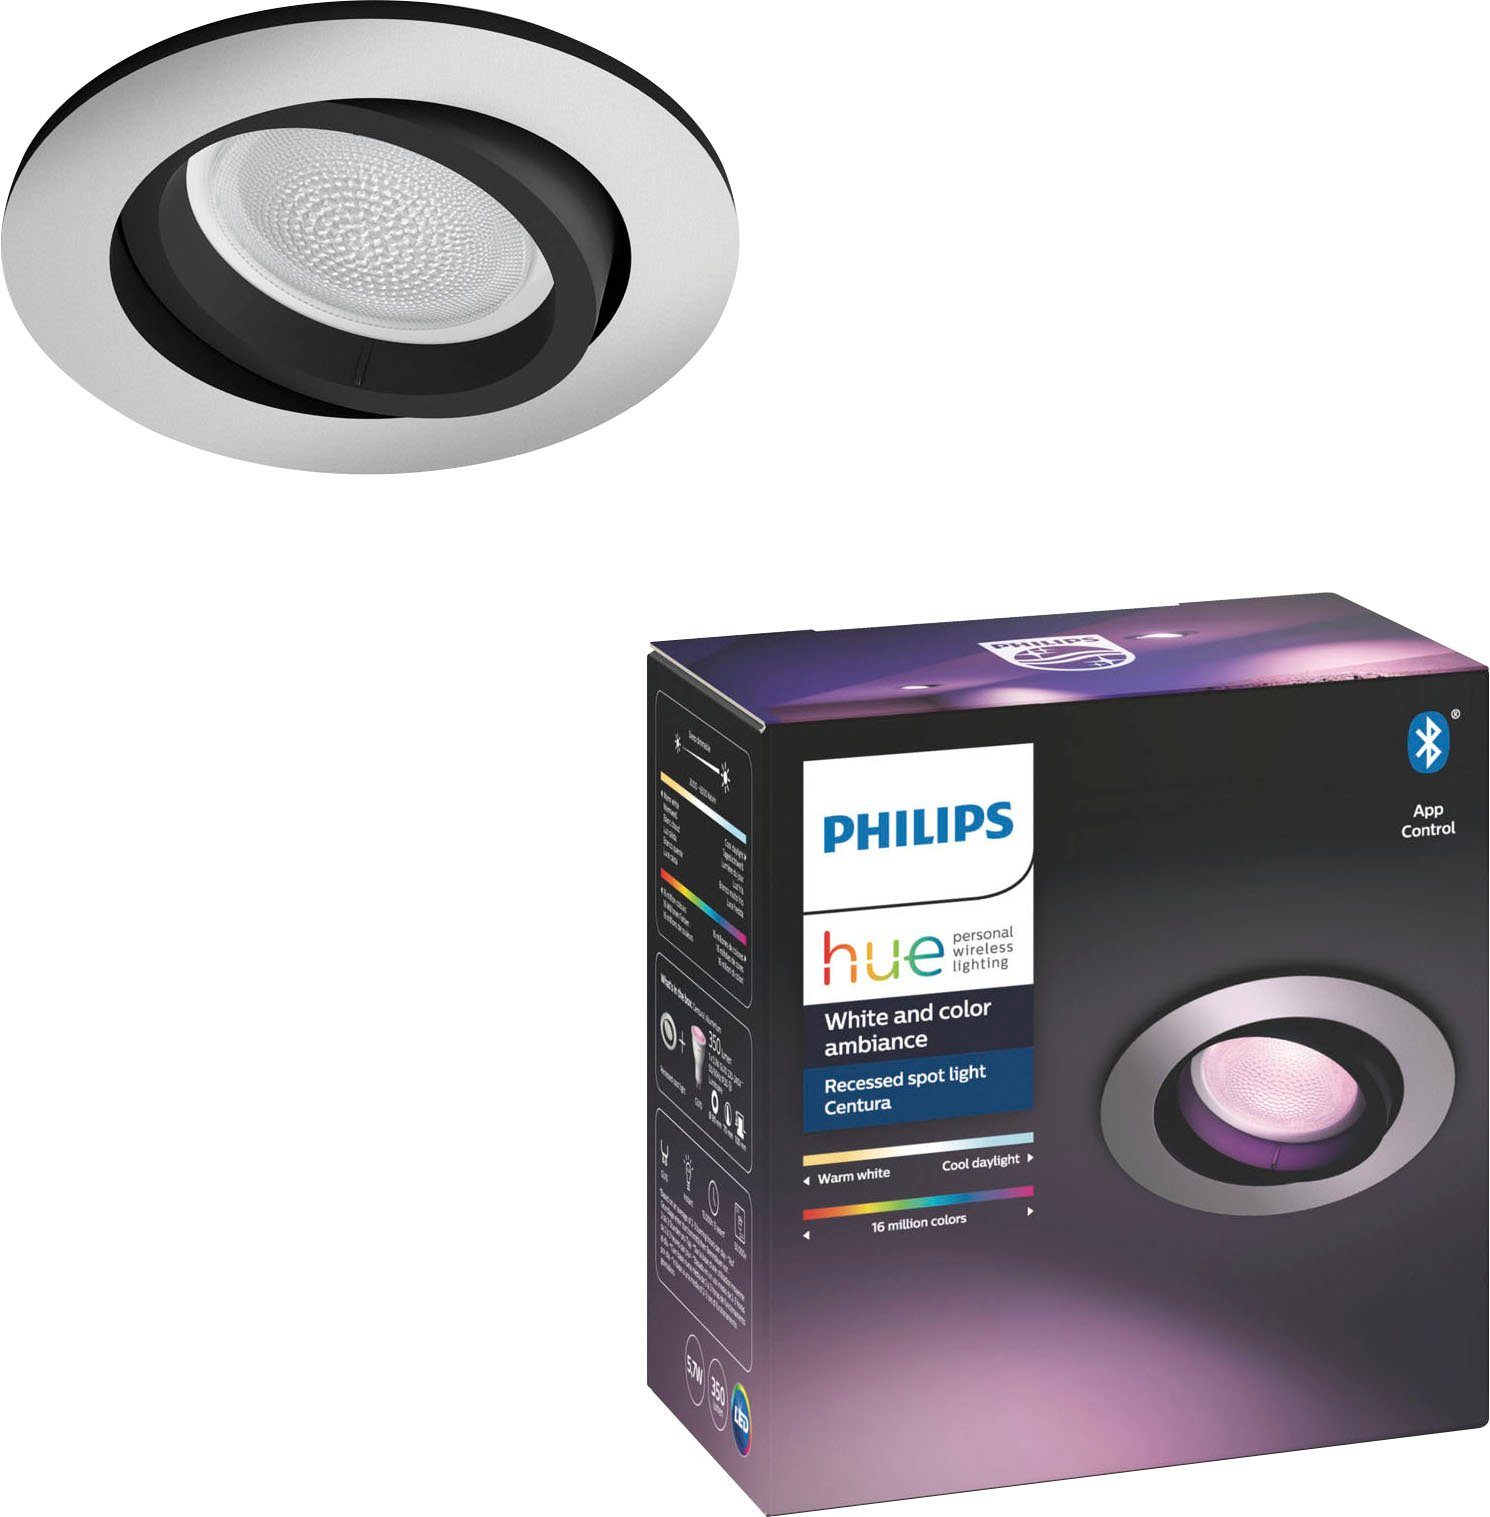 Dimmfunktion, Leuchtmittel Philips LED Farbwechsler Hue Flutlichtstrahler wechselbar, Centura,